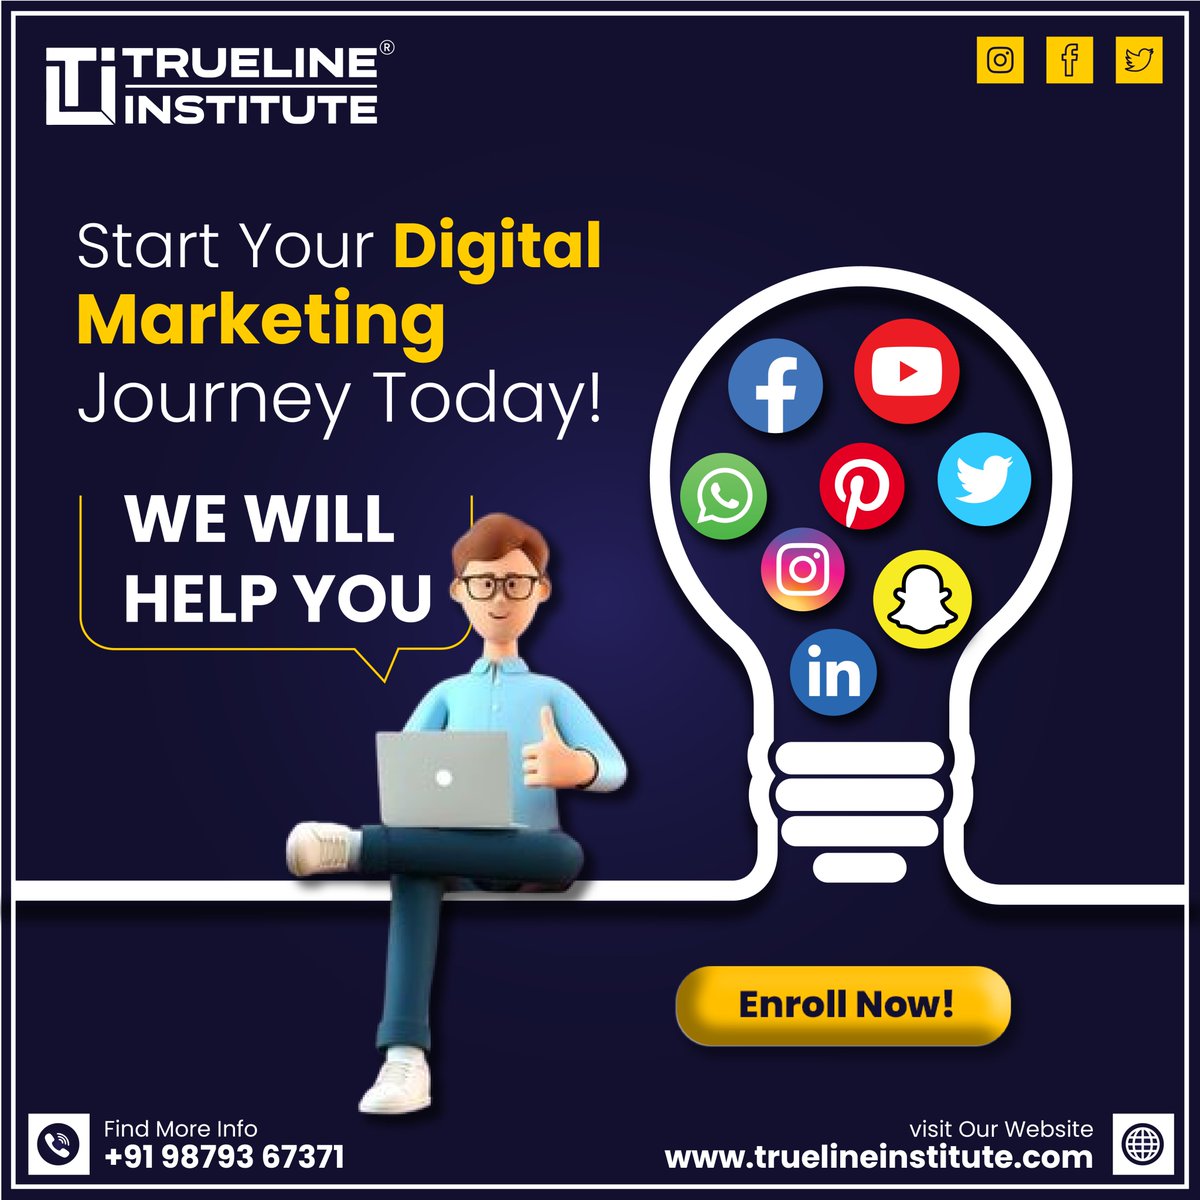 📢 Start Your Digital Marketing Journey Today!  | Trueline Institute
☎️ +91 98793 67371
🌐truelineinstitute.com
📧truelineinstitute@gmail.com
#truelineinstitute #institute #itcourses #digitalmarketing #mediamarketing #traningexcellence #besteducation #innovativeeducation